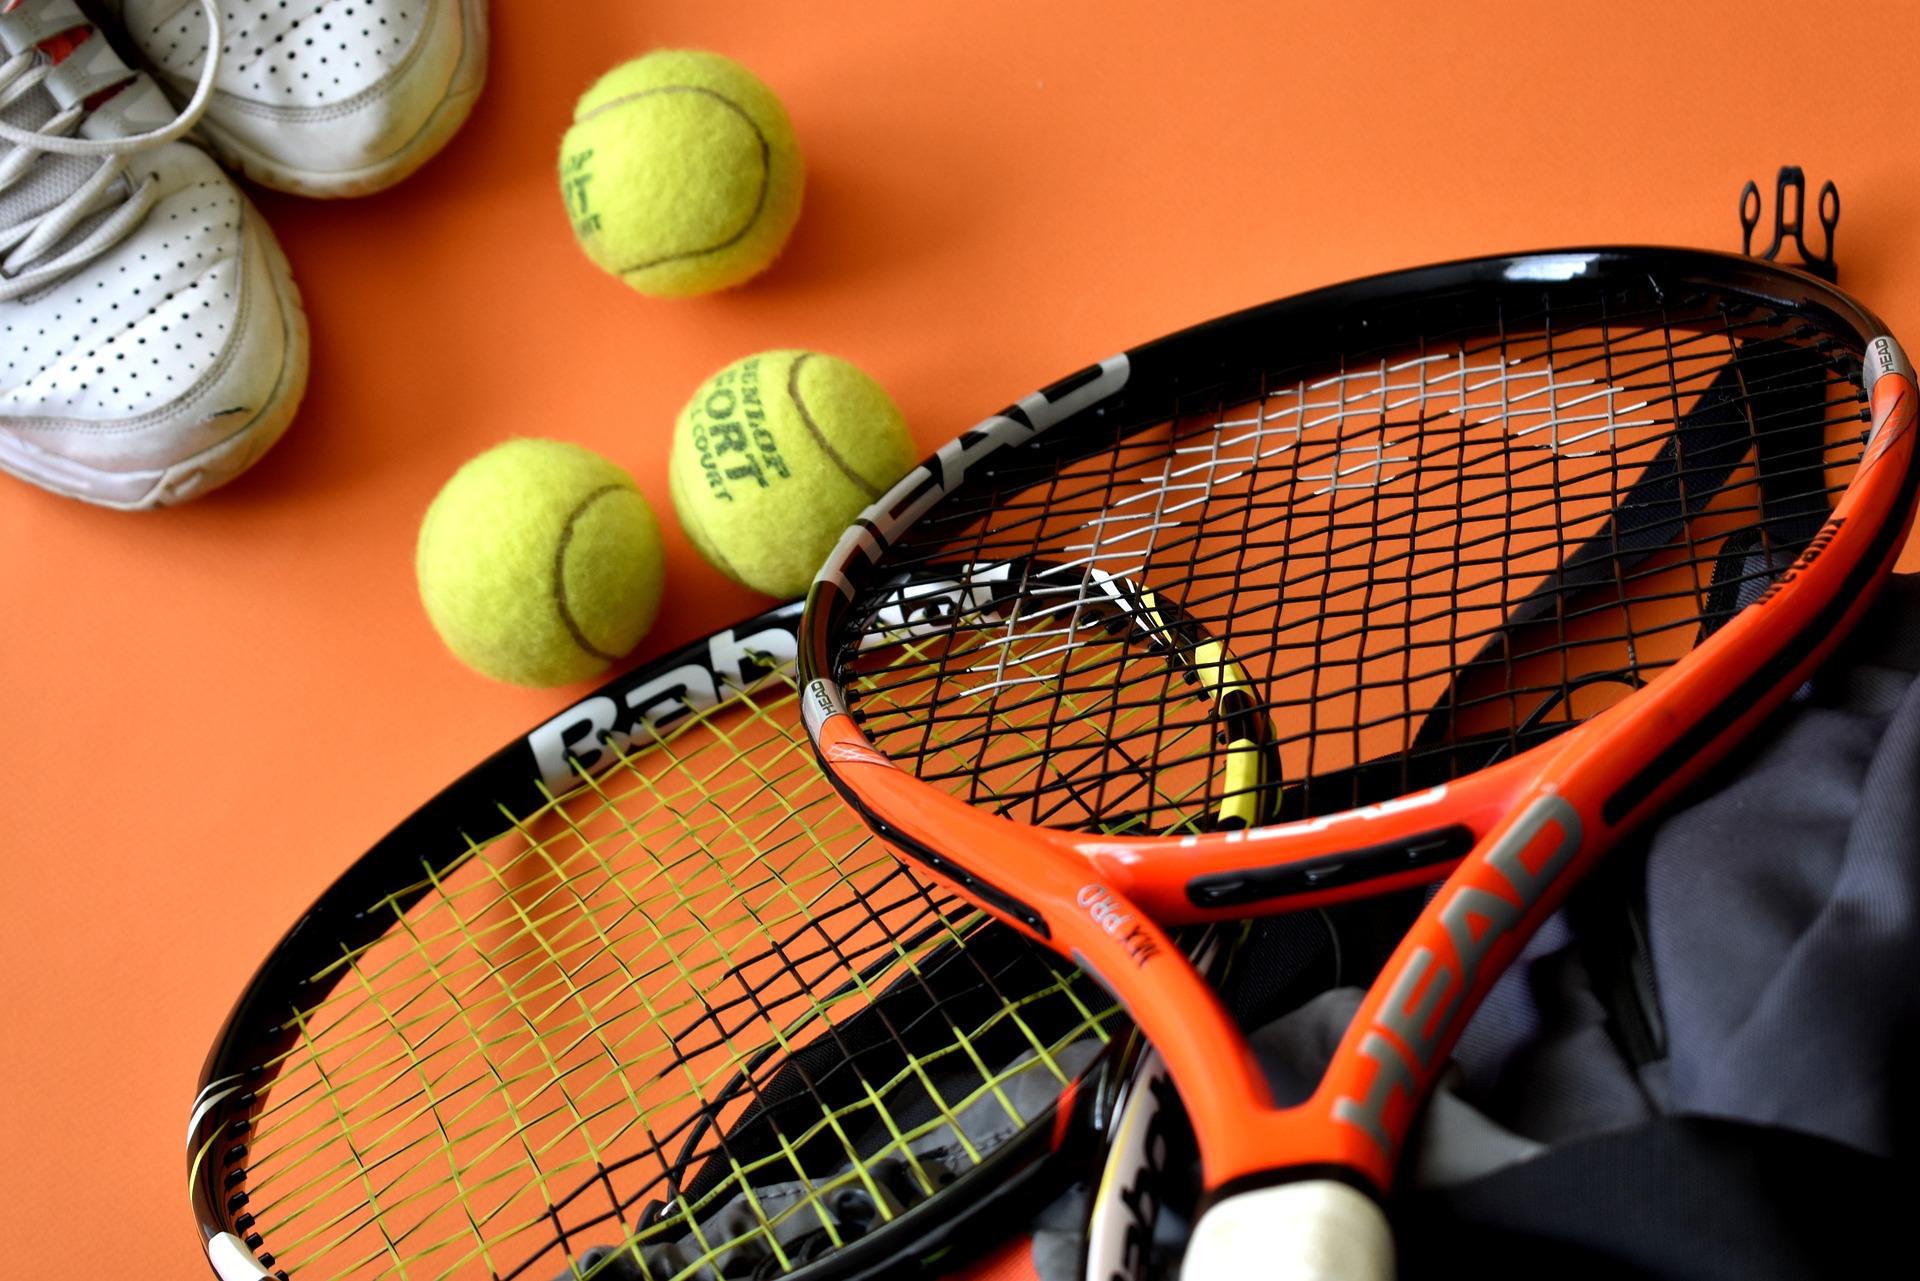 Buy Tennis Club Equipment Online